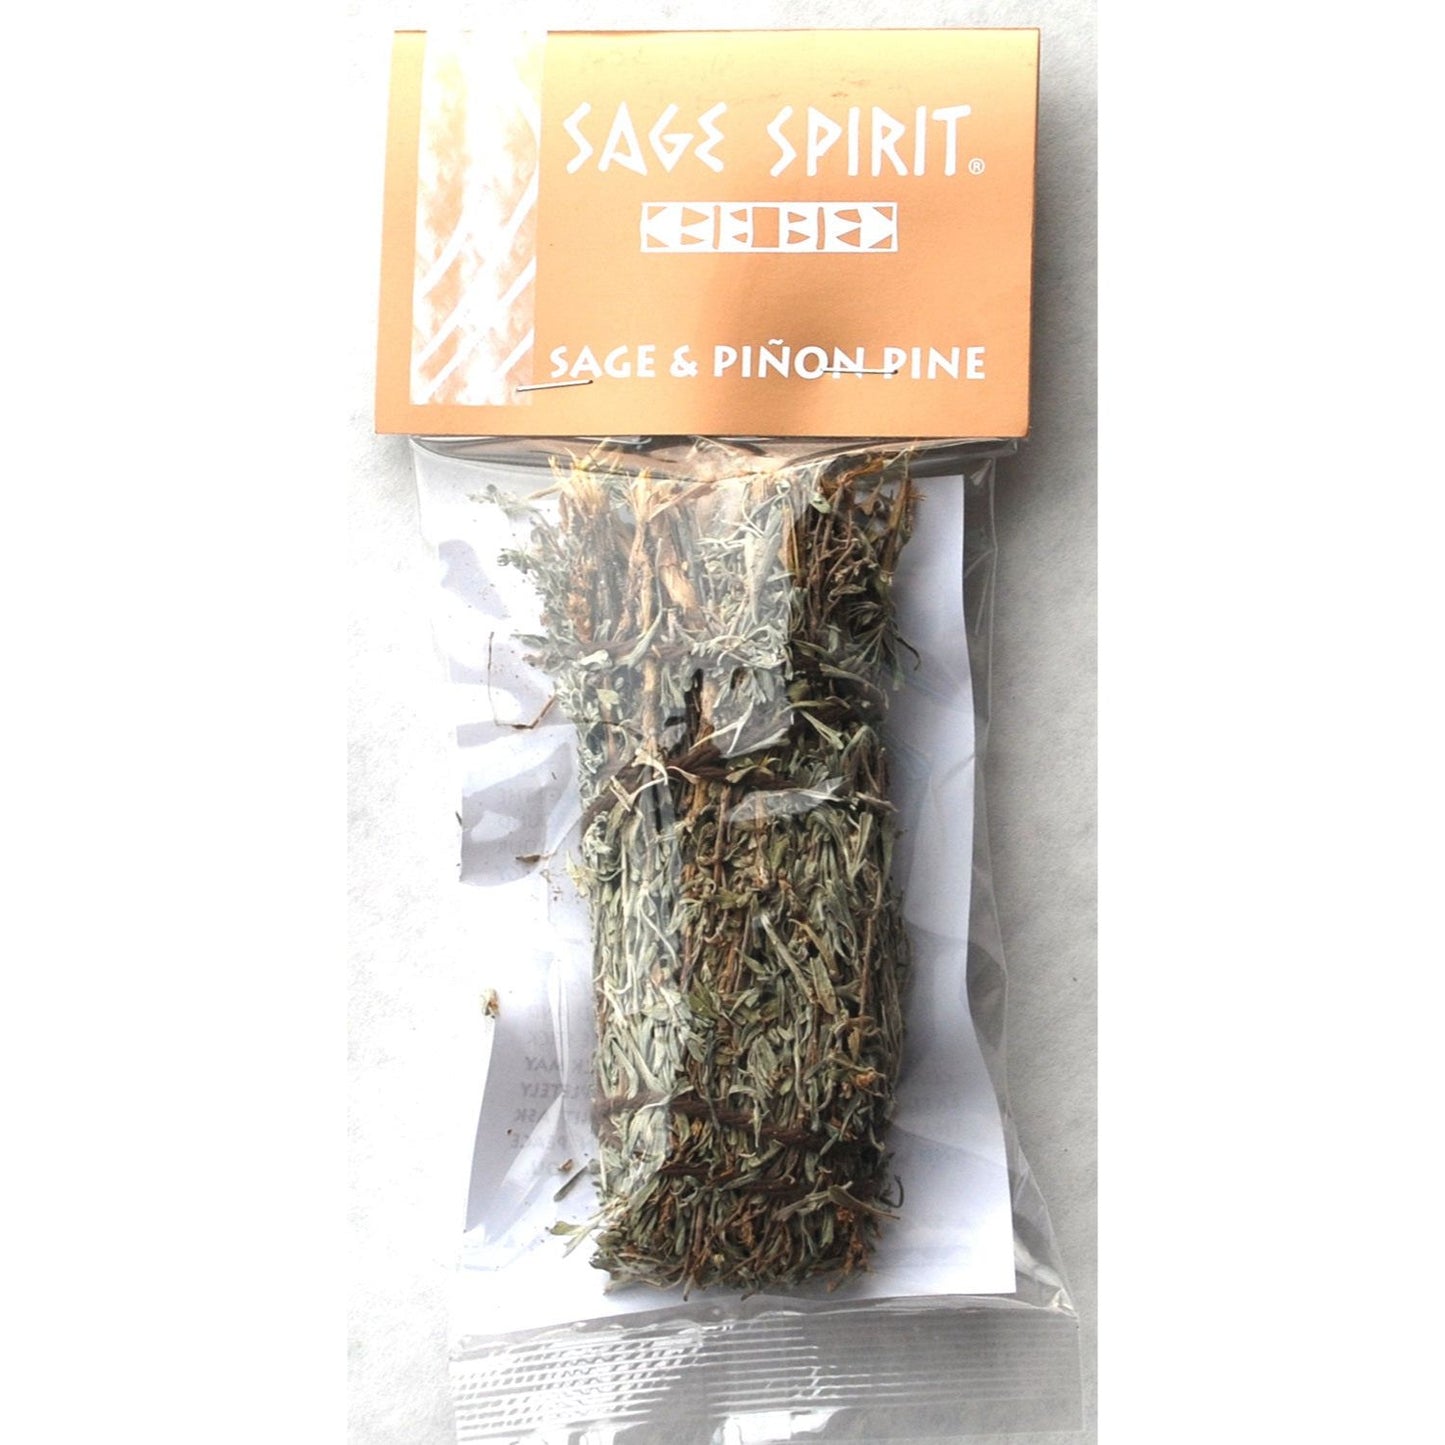 Sage Spirit - Smudge Sticks, Sage & Pinon Pine